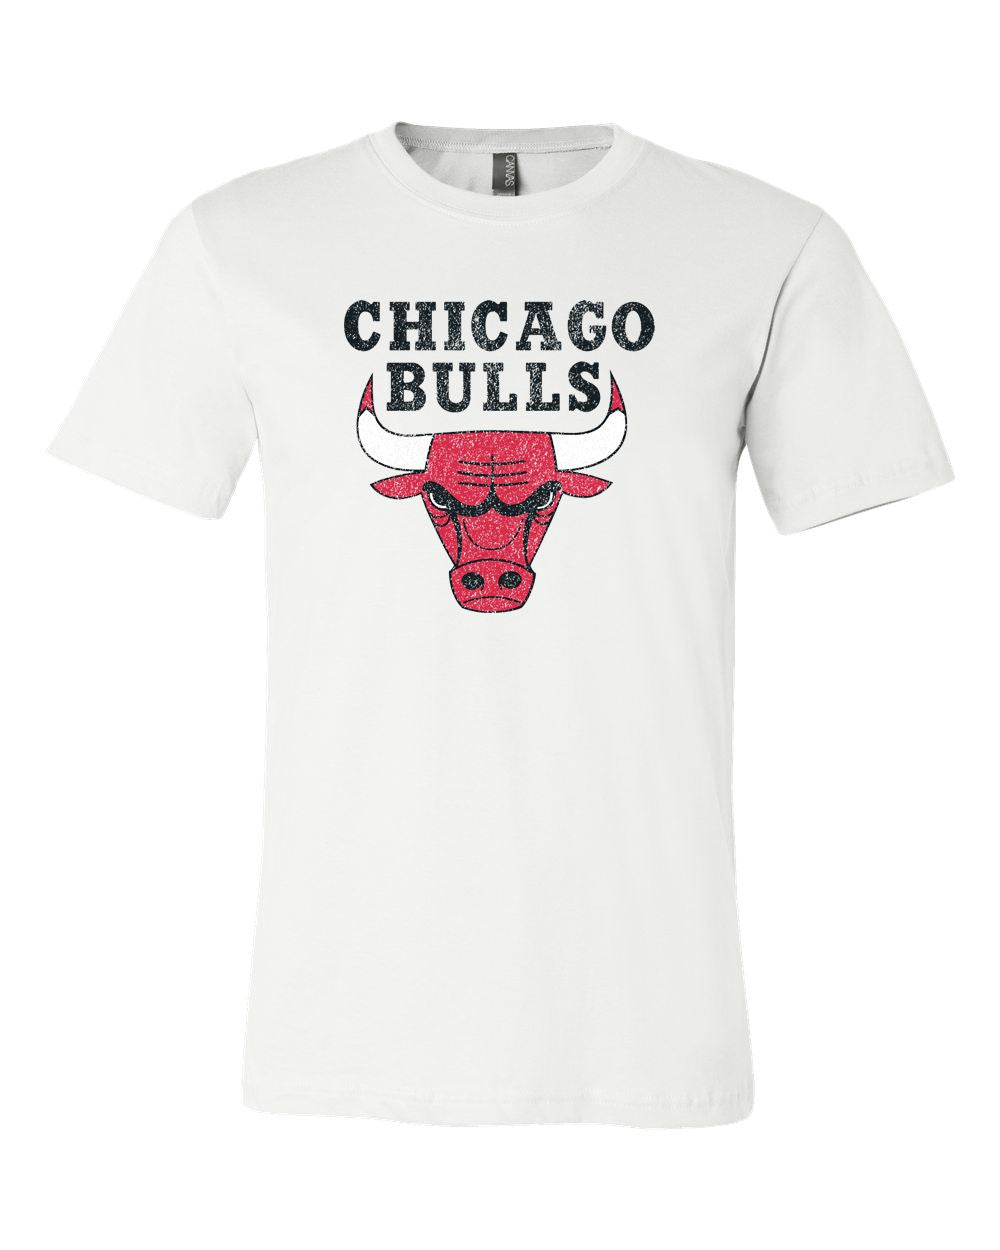 Chicago Bulls NBA Side Logo T-shirt black, red and white